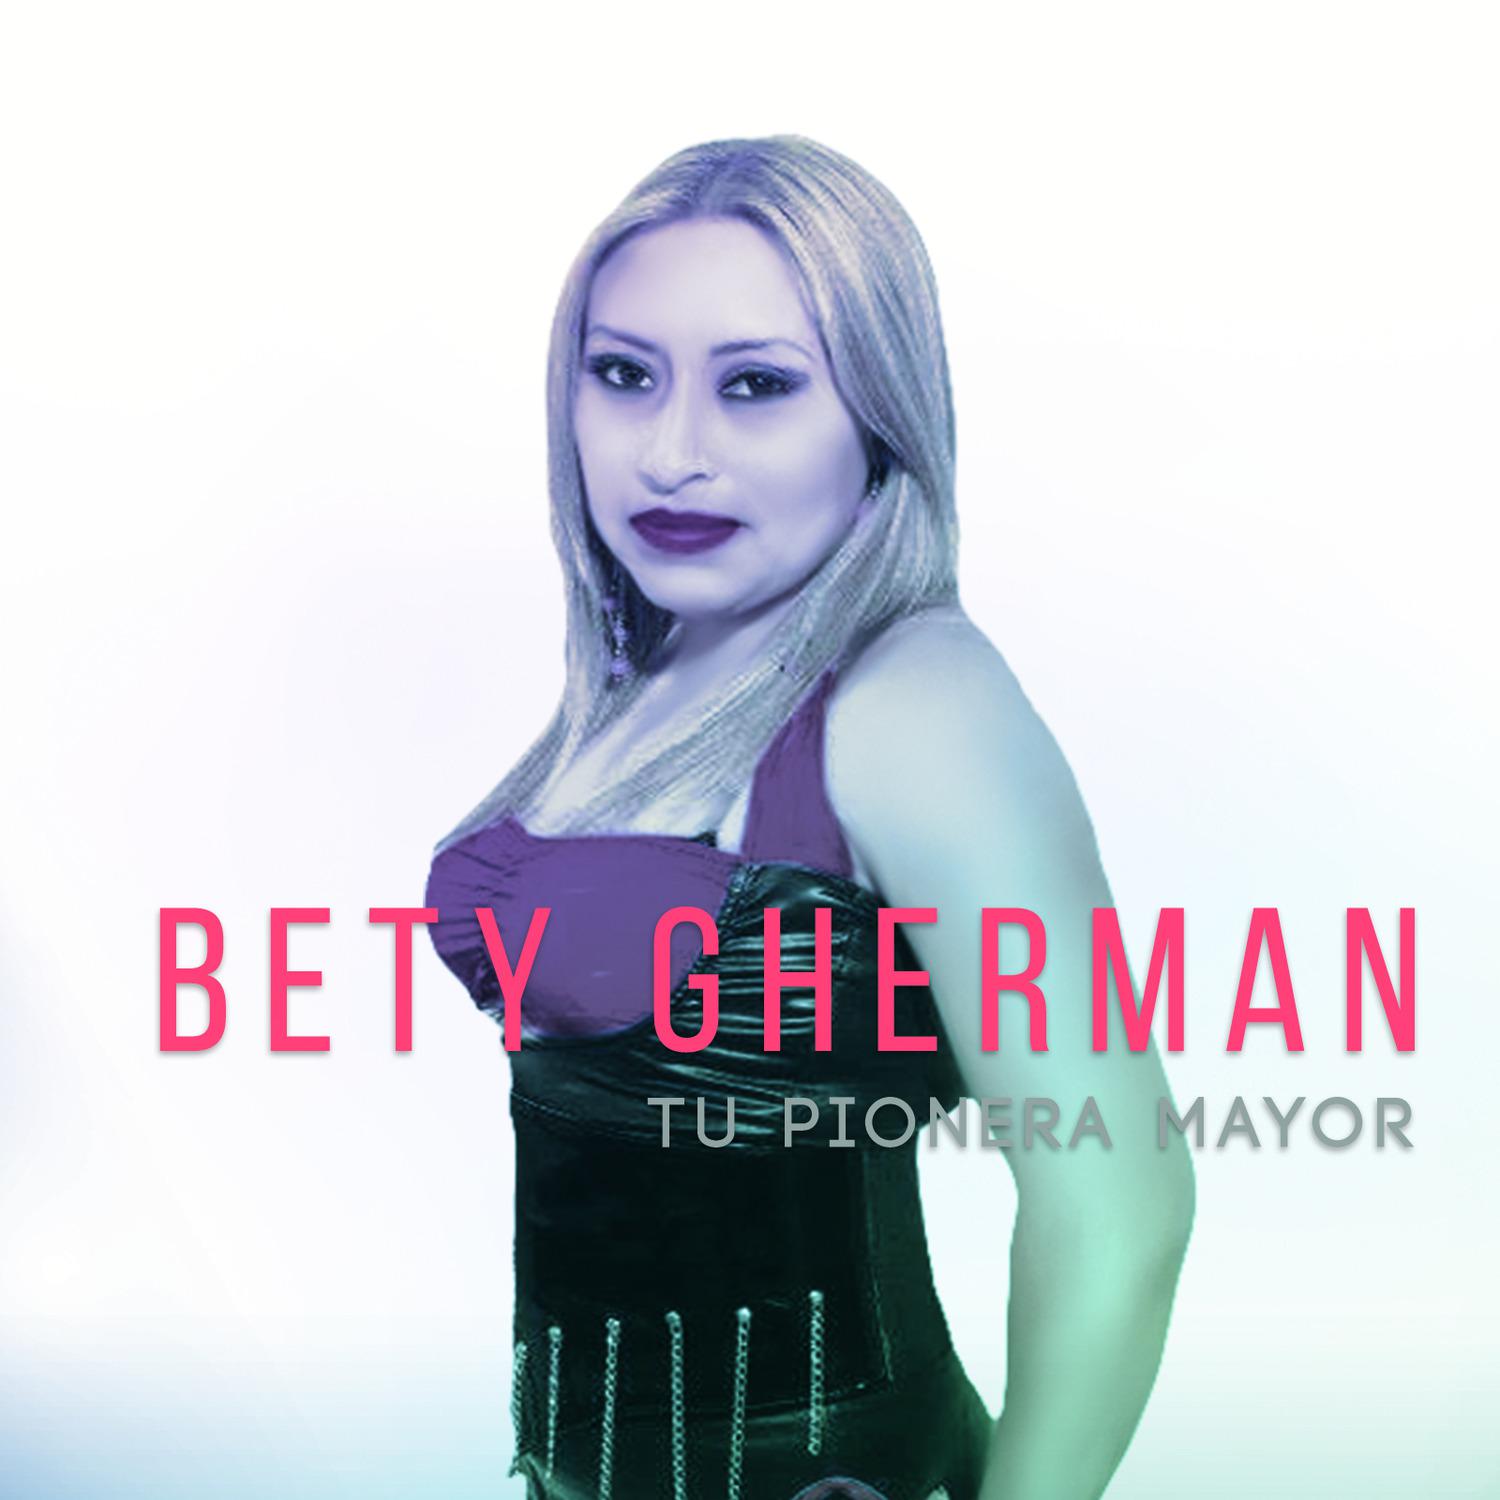 Bety Gherman - Oye Tonta